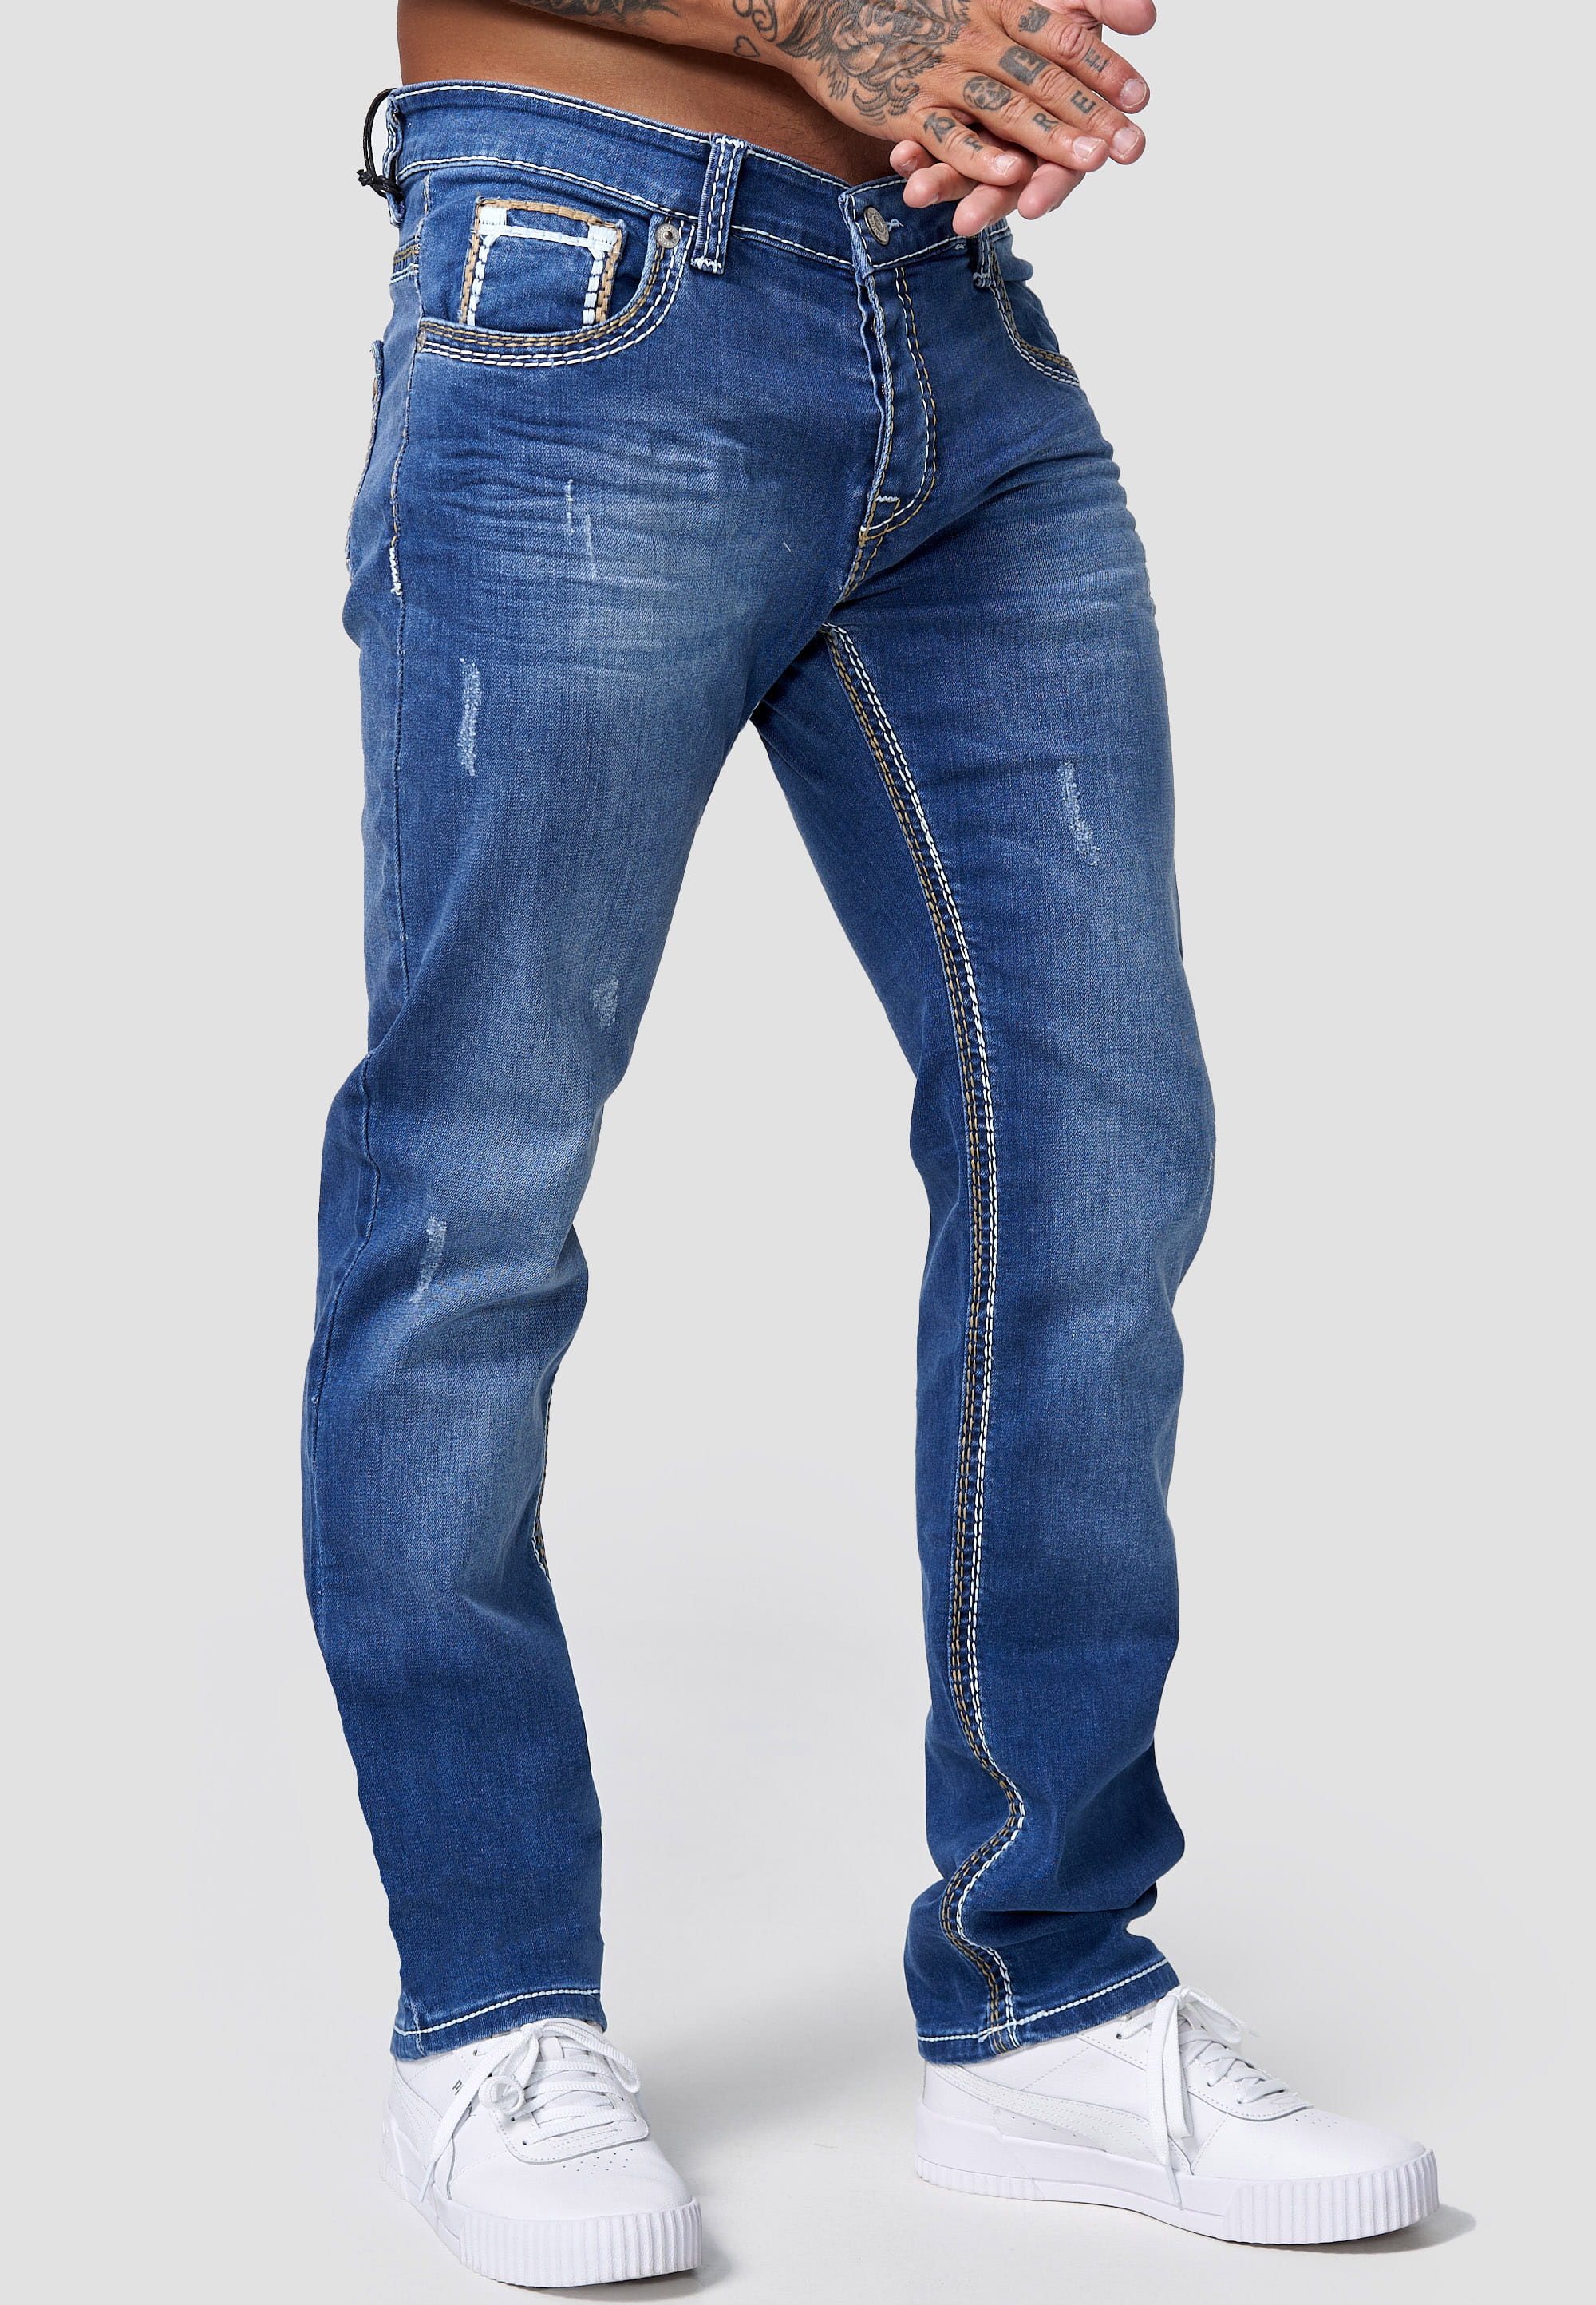 Herren Jeans Hose Slim Fit Männer Skinny Denim Designerjeans 5176C | | OneRedox Stijlfabriek